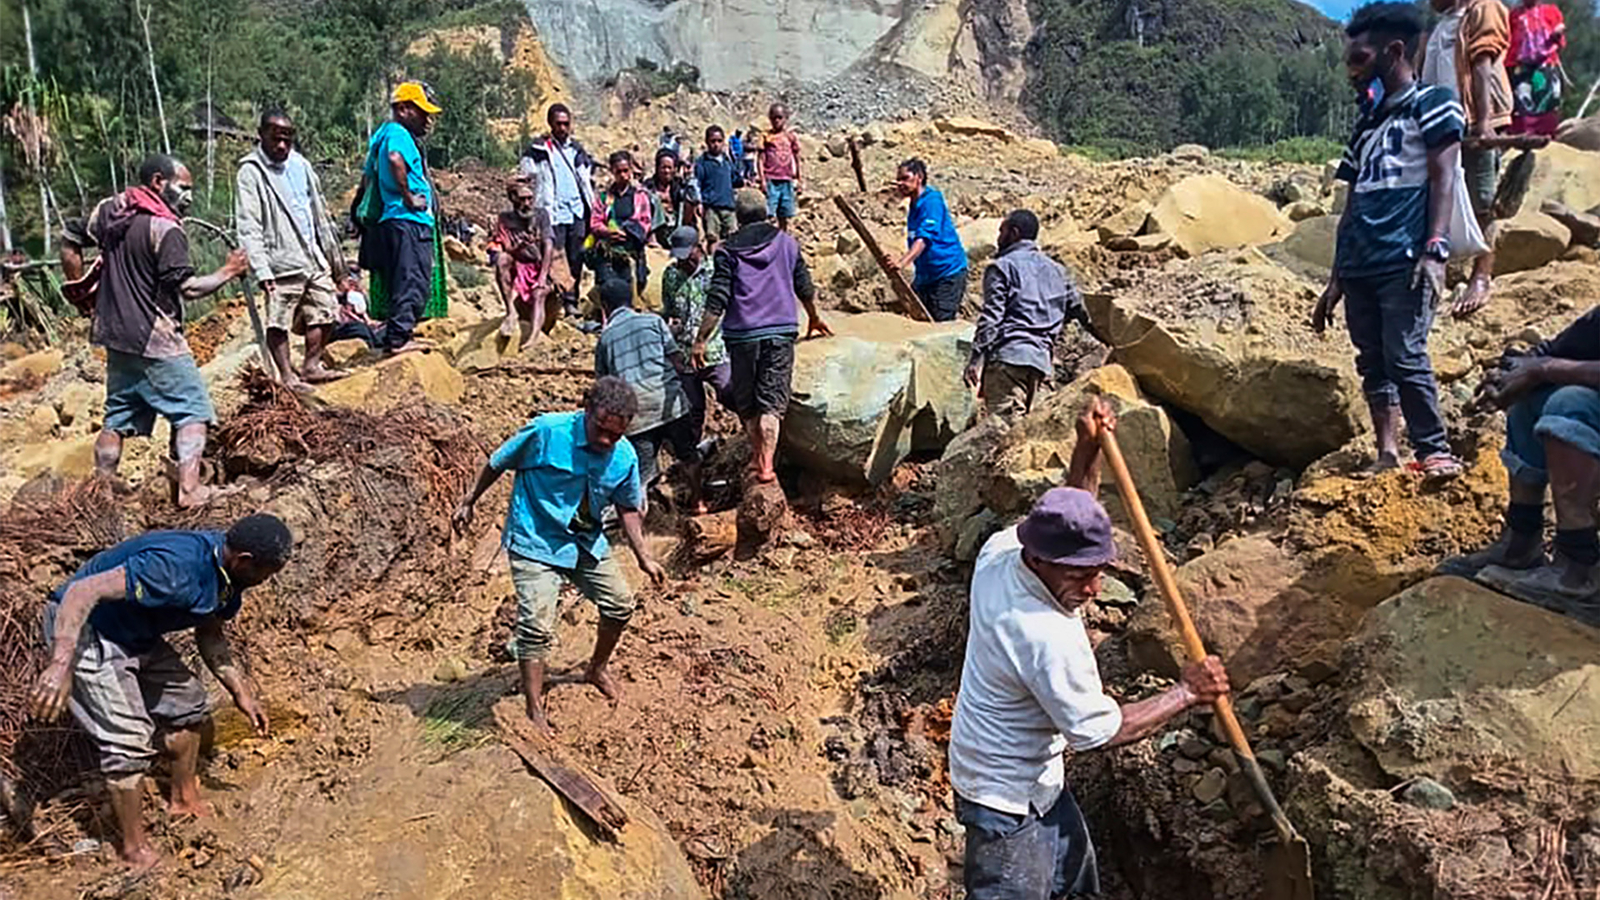 Papua New Guinea landslide: UN estimates over 670 deaths in natural disaster [Video]